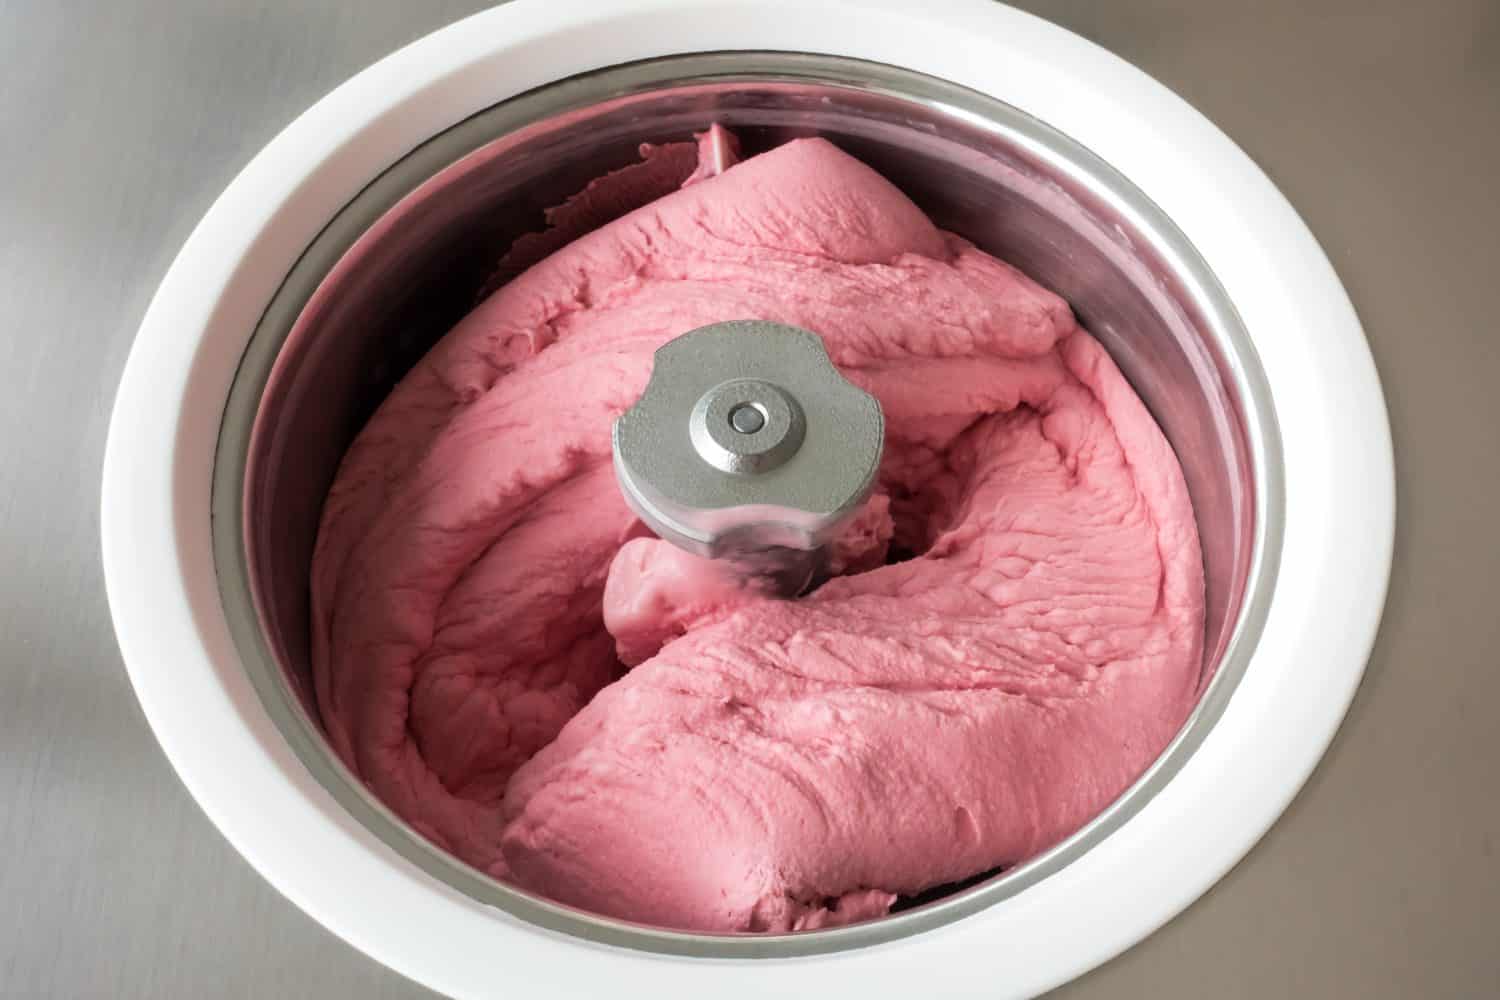 Homemade raspberry ice cream churning in a small professional ice cream machine.